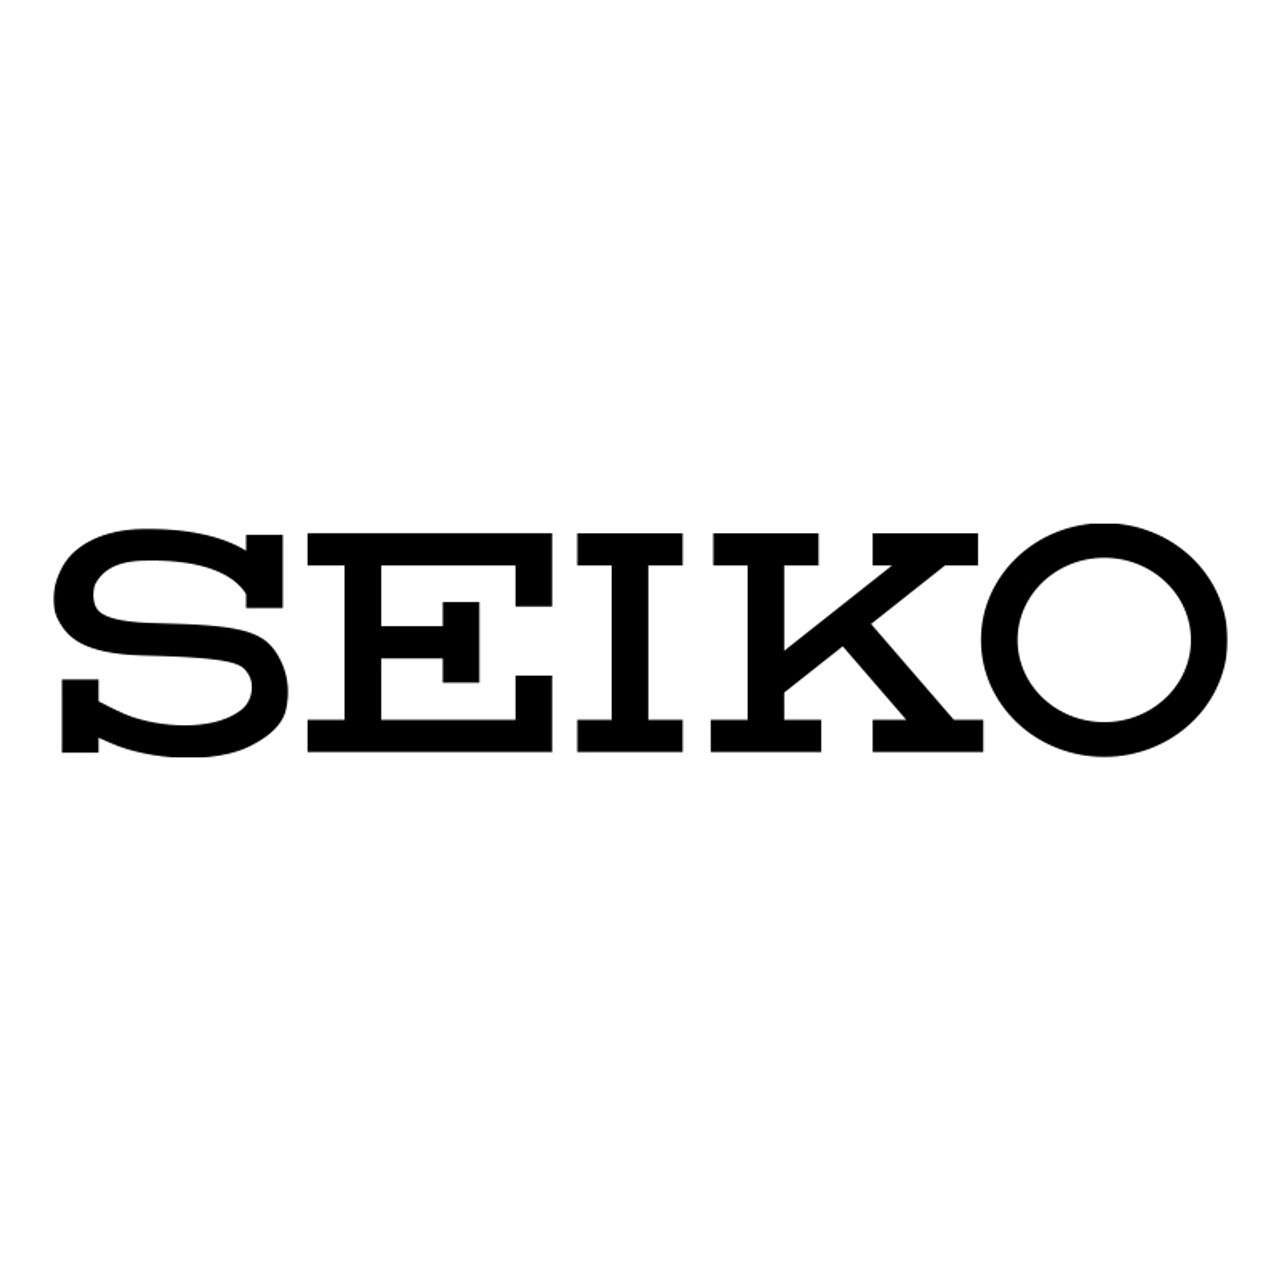 Seiko 7N36 - Seiko Watch Movements | All Time Co.